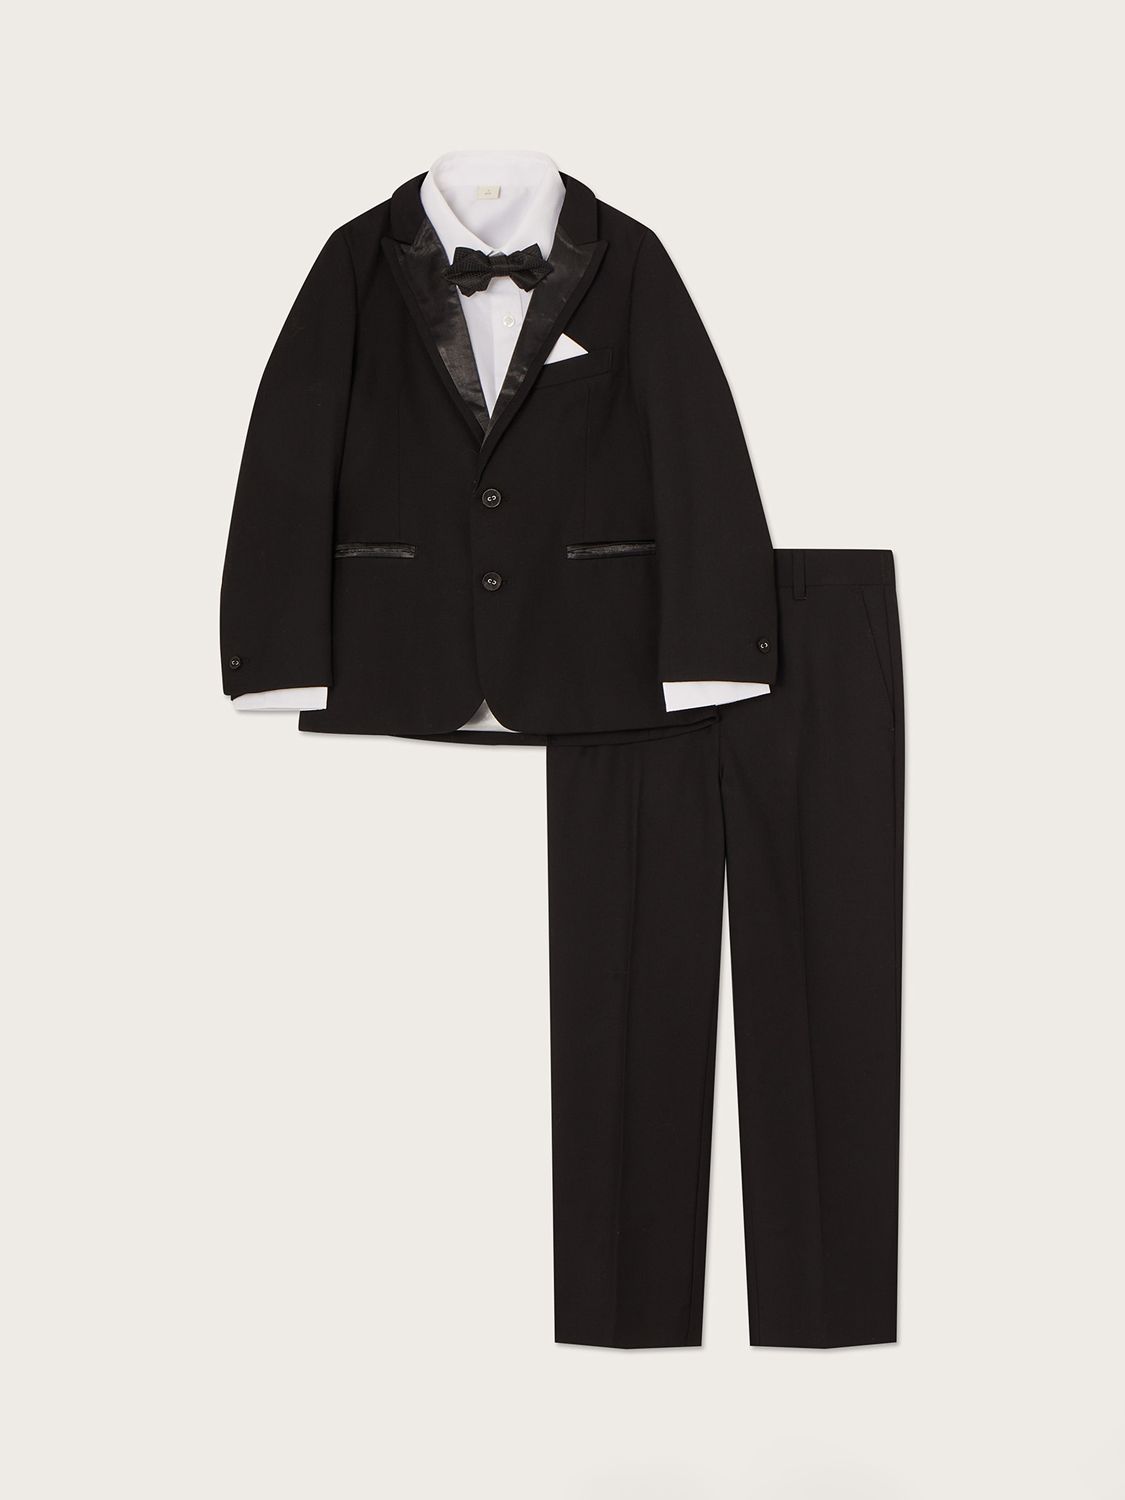 Monsoon Kids' Benjamin Four-Piece Suit, Black, 8 years